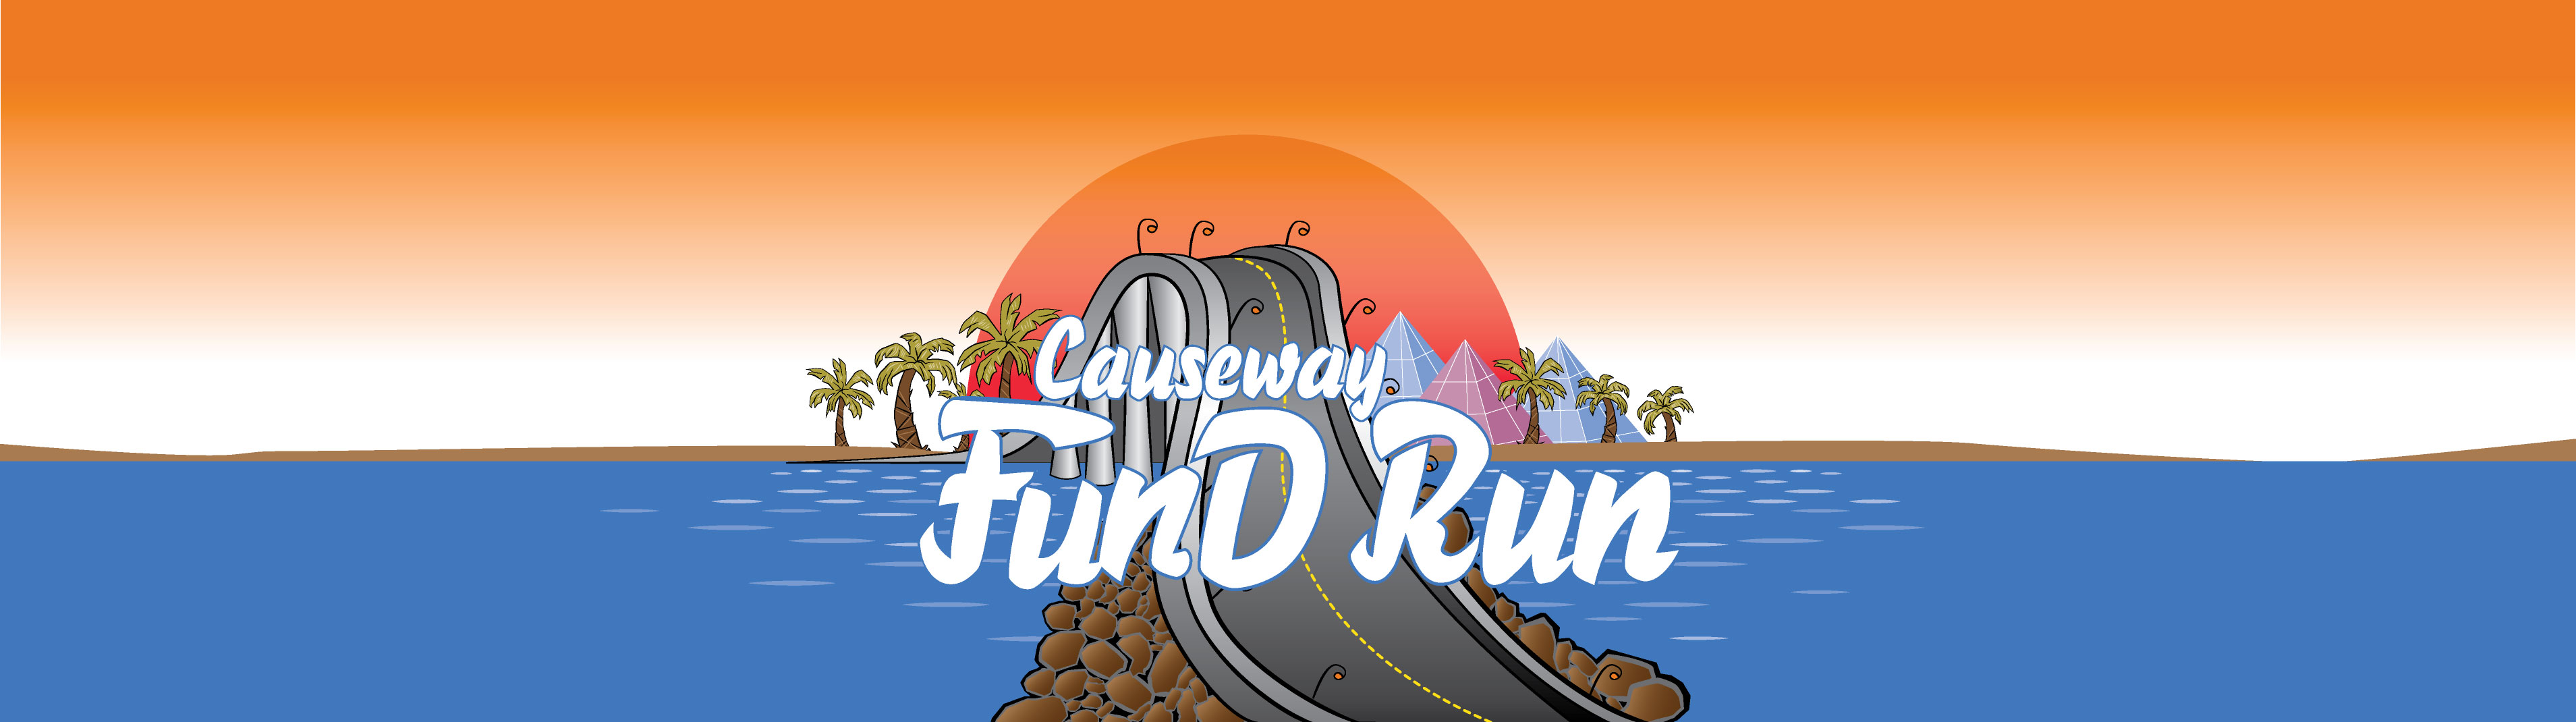 Causeway FunD Run title on top of the Galveston Causeway bridge graphic